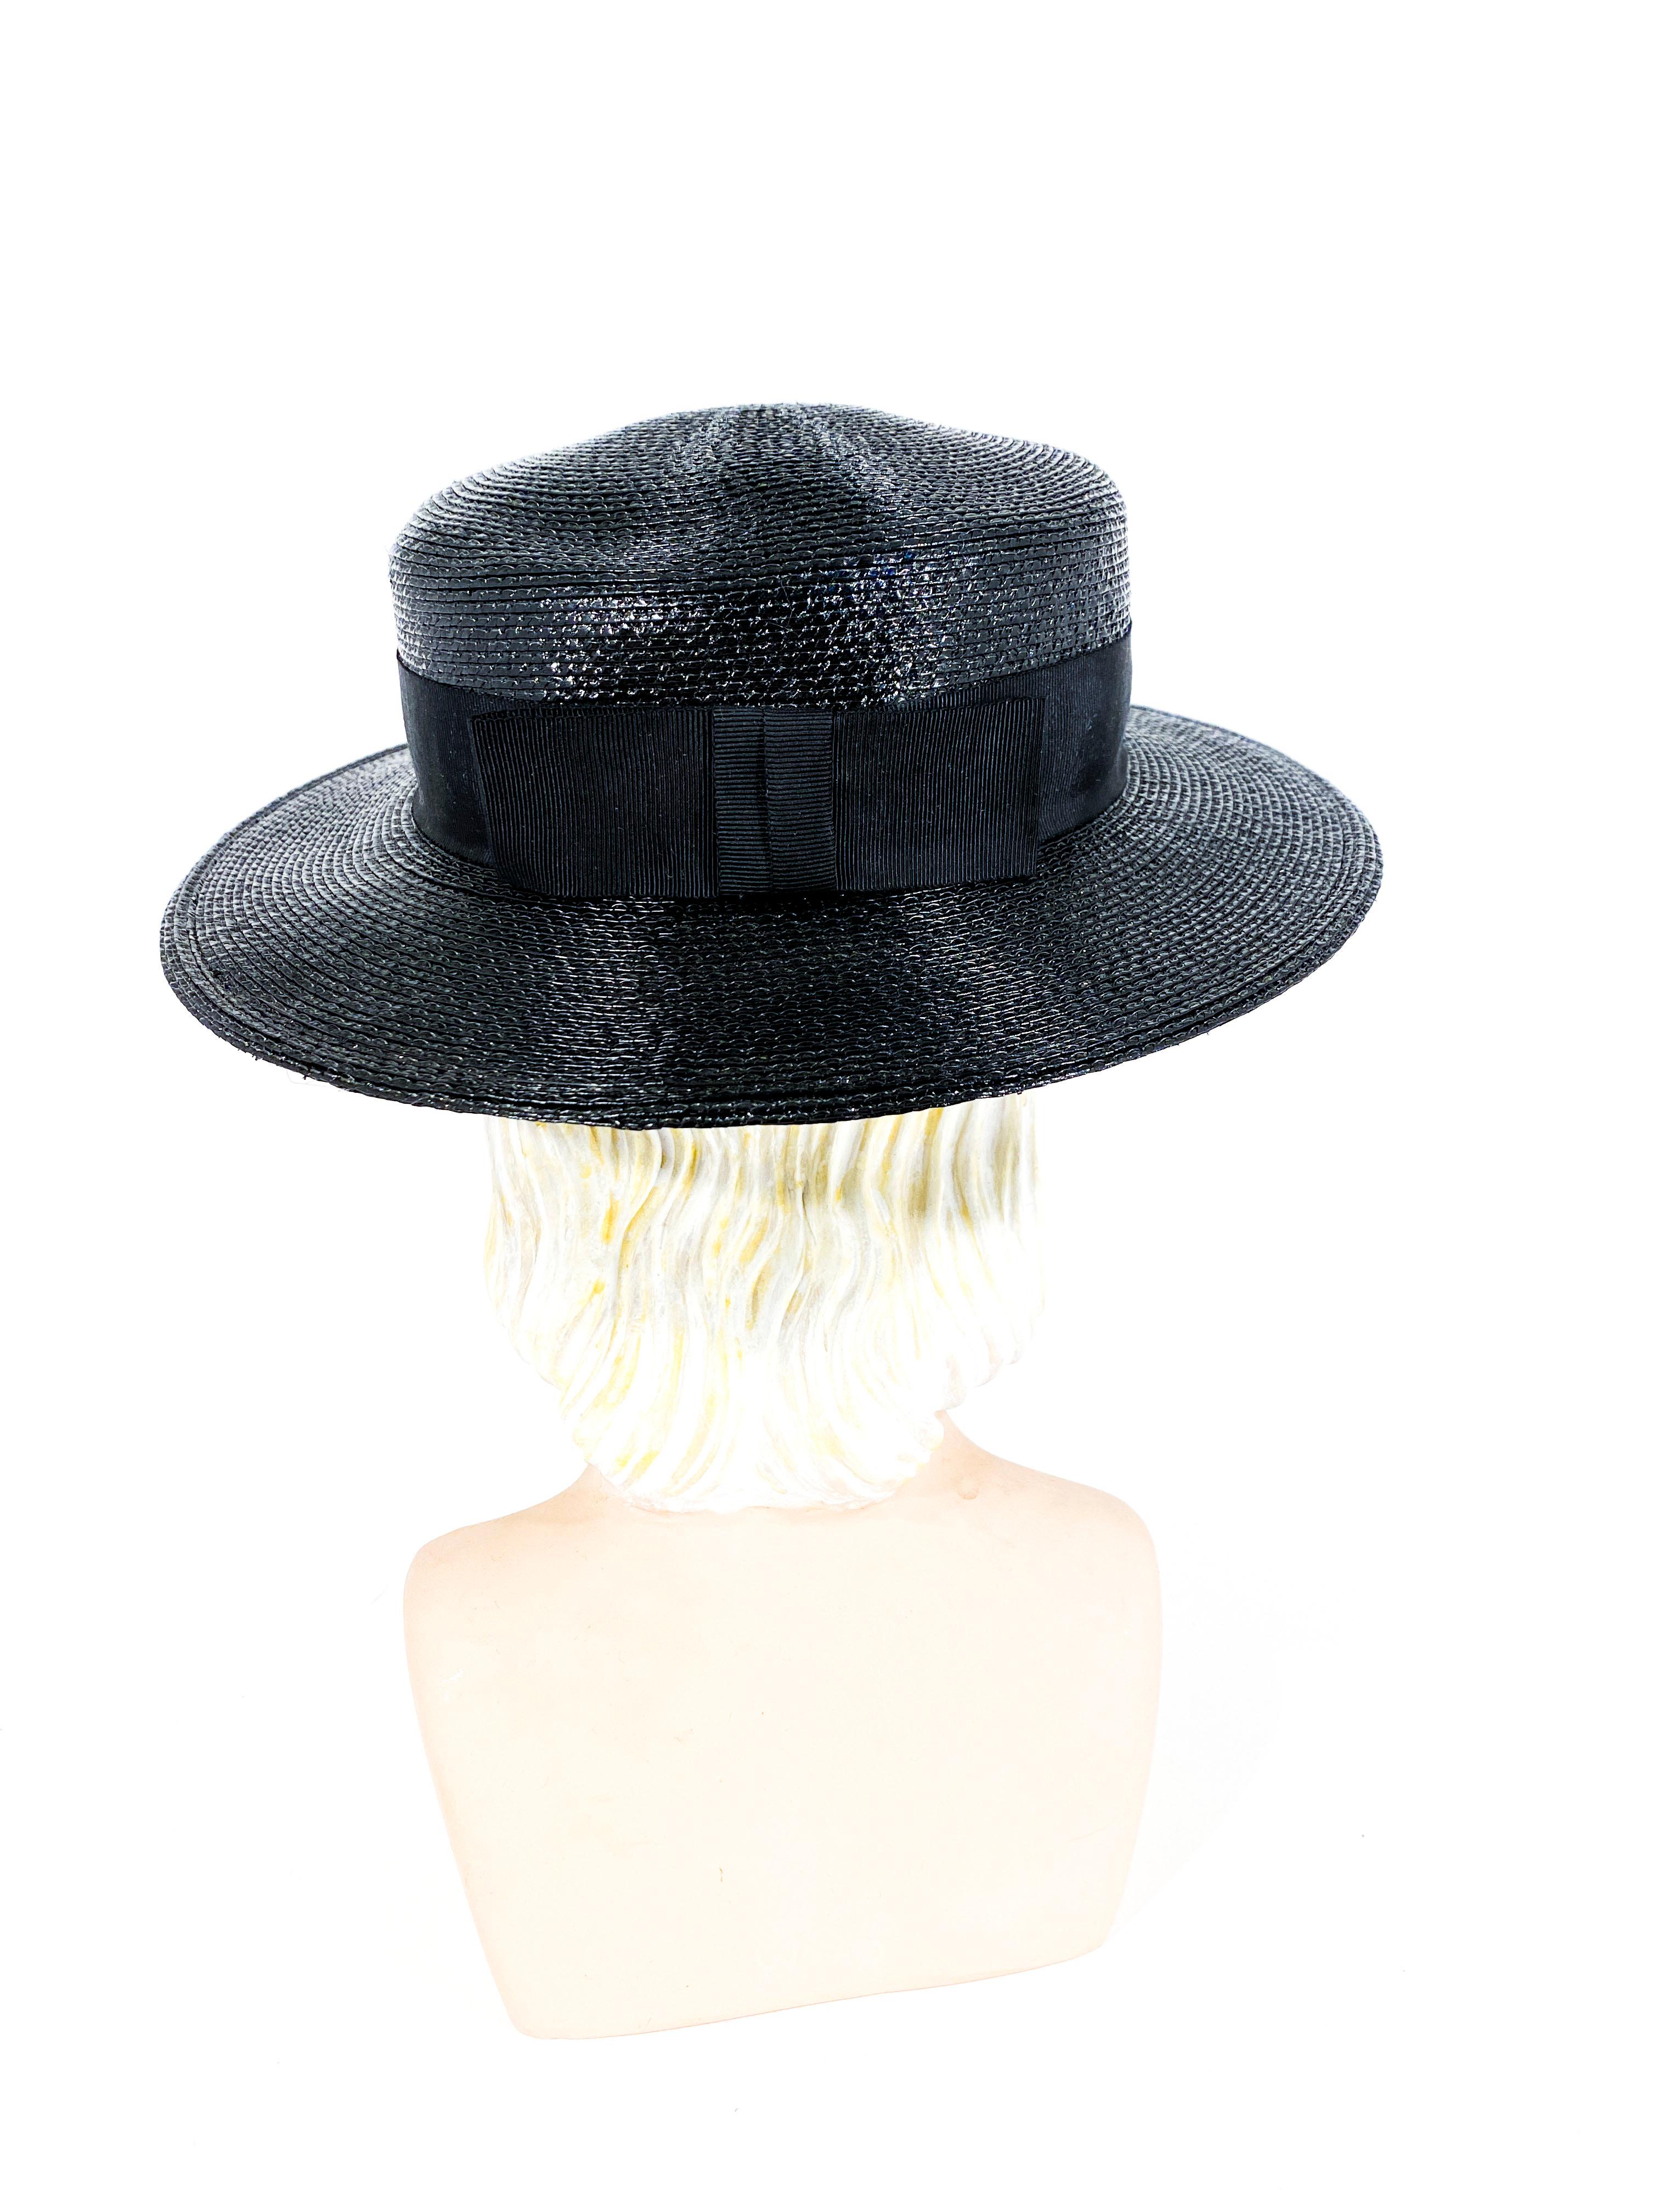 Women's 1960s Schiaparelli Black Coated Straw Hat